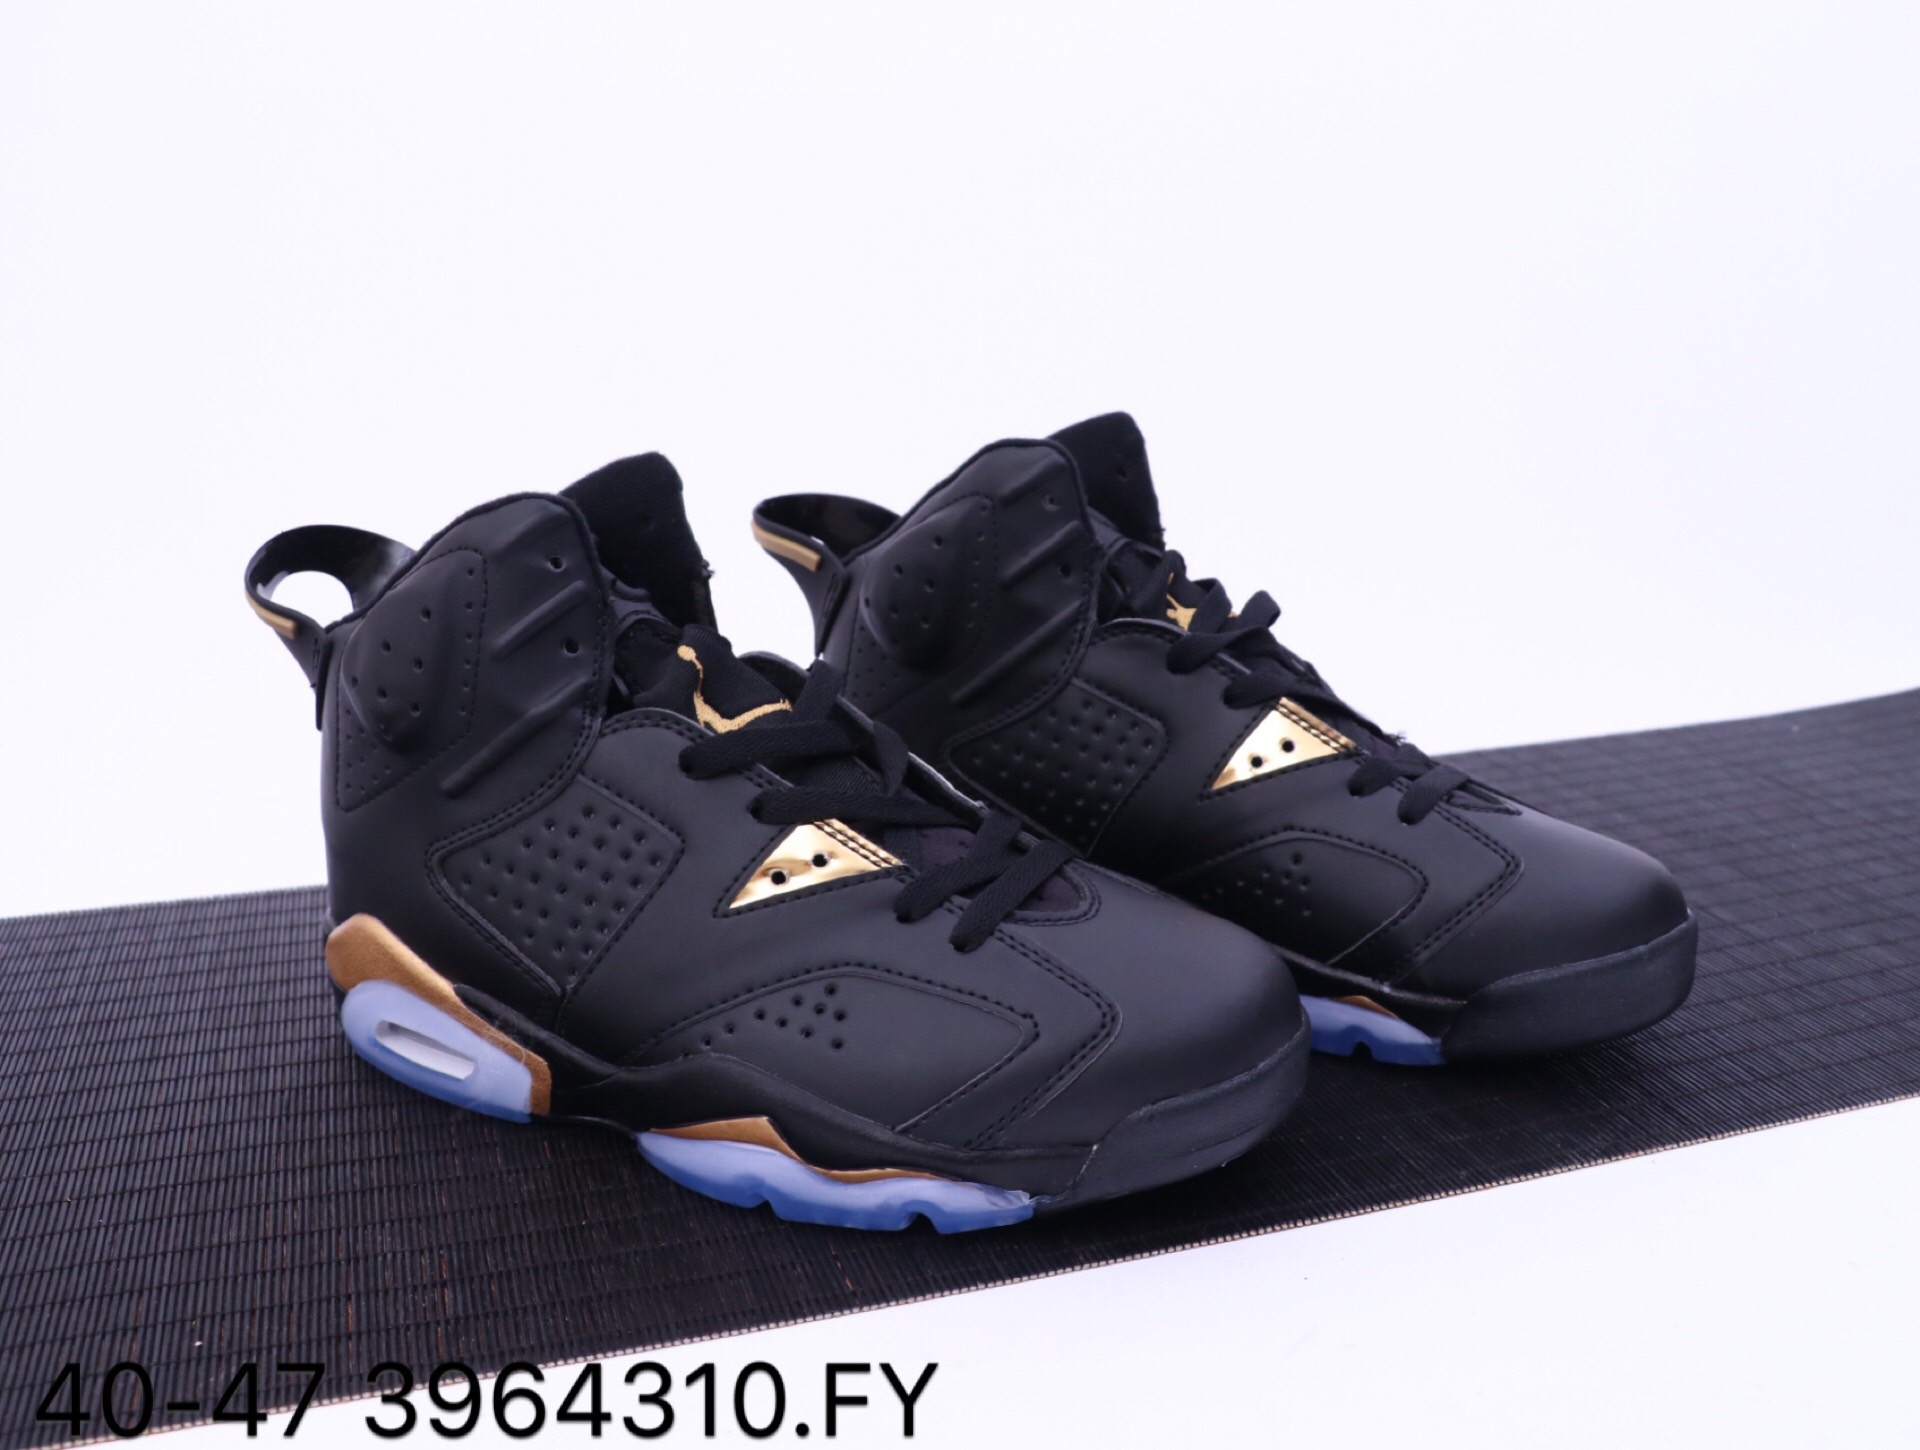 Air Jordan 6 Tinker Black Gold Shoes